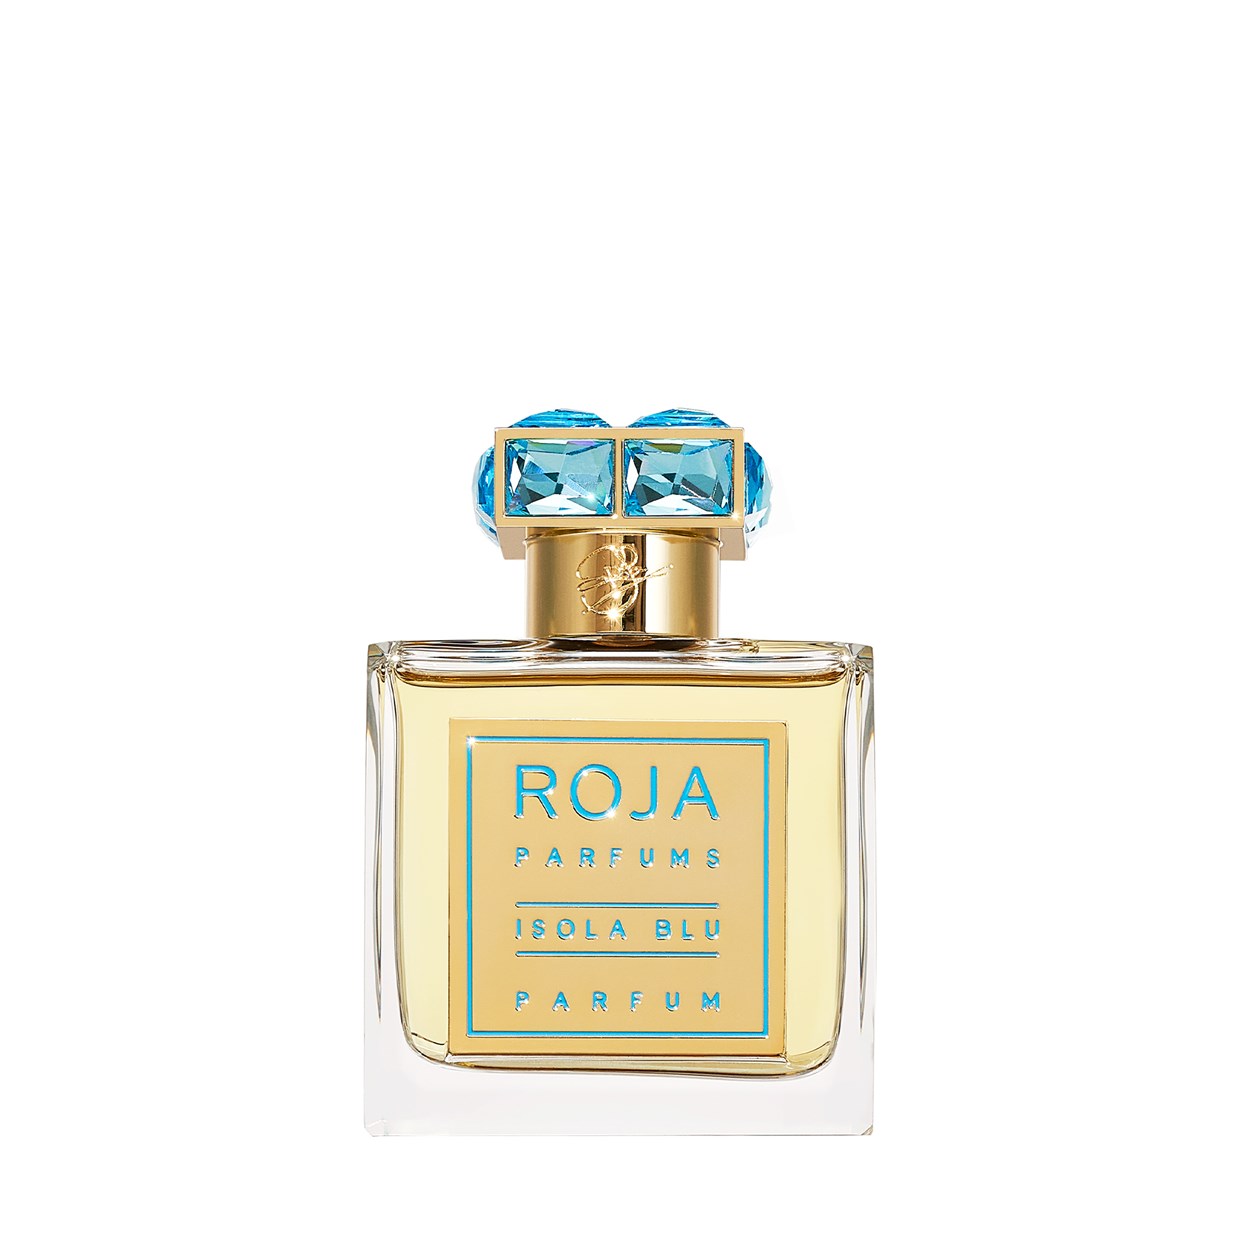 Buy Roja Parfums Special Collection Burlington 1819 Eau de Parfum